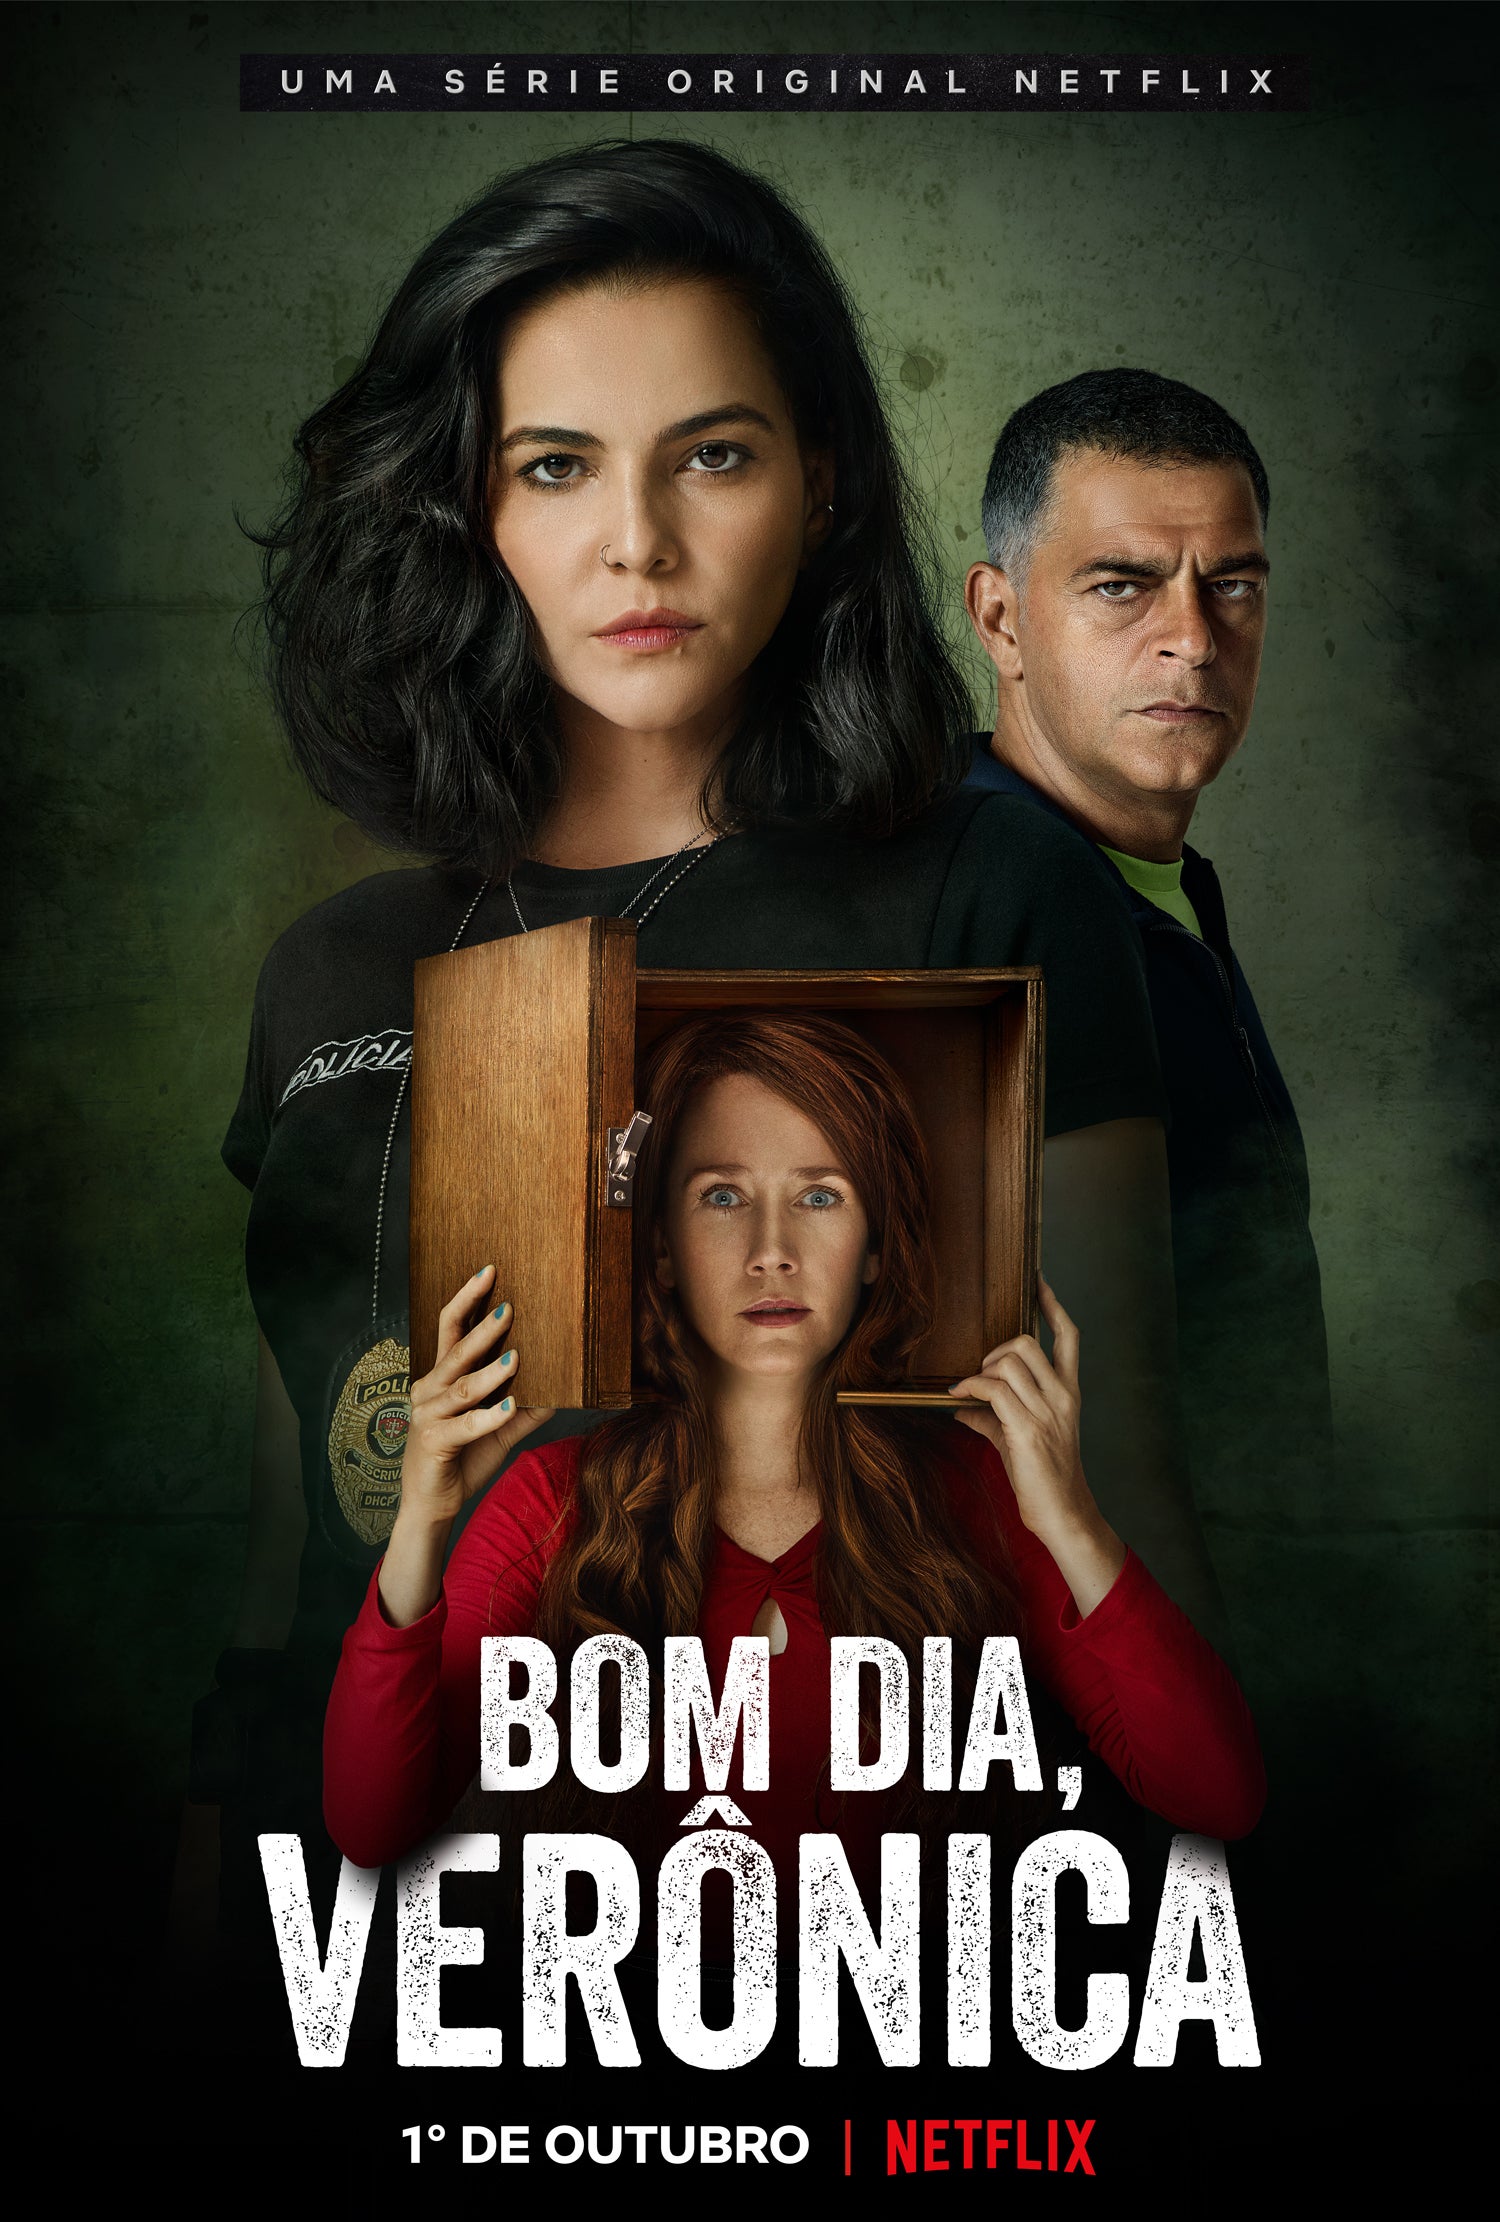 TV ratings for Bom Dia, Verônica in India. Netflix TV series